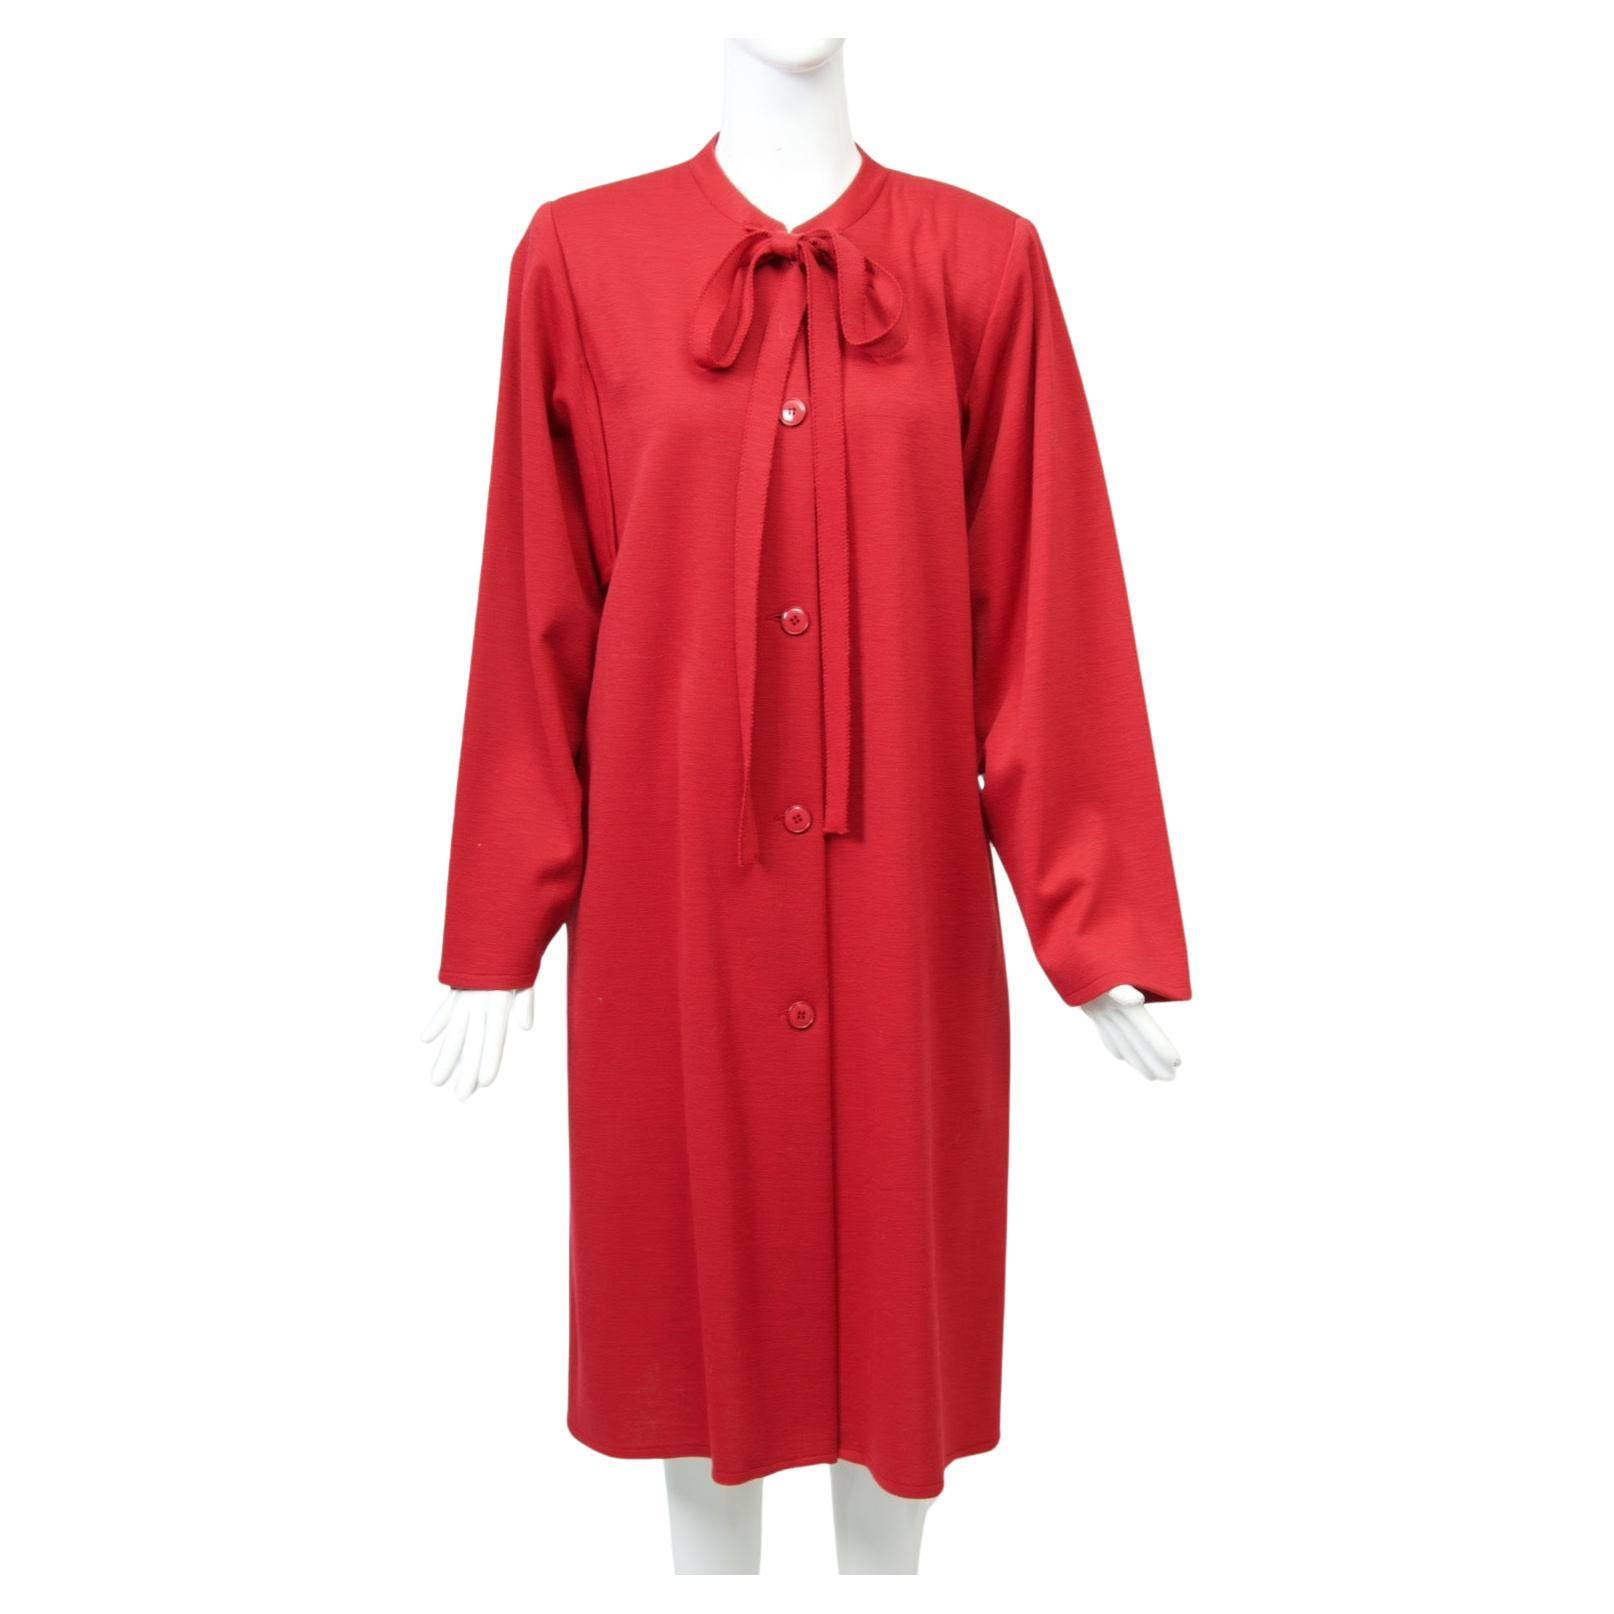 Sonia Rykiel Red Knit Coat/Dress For Sale